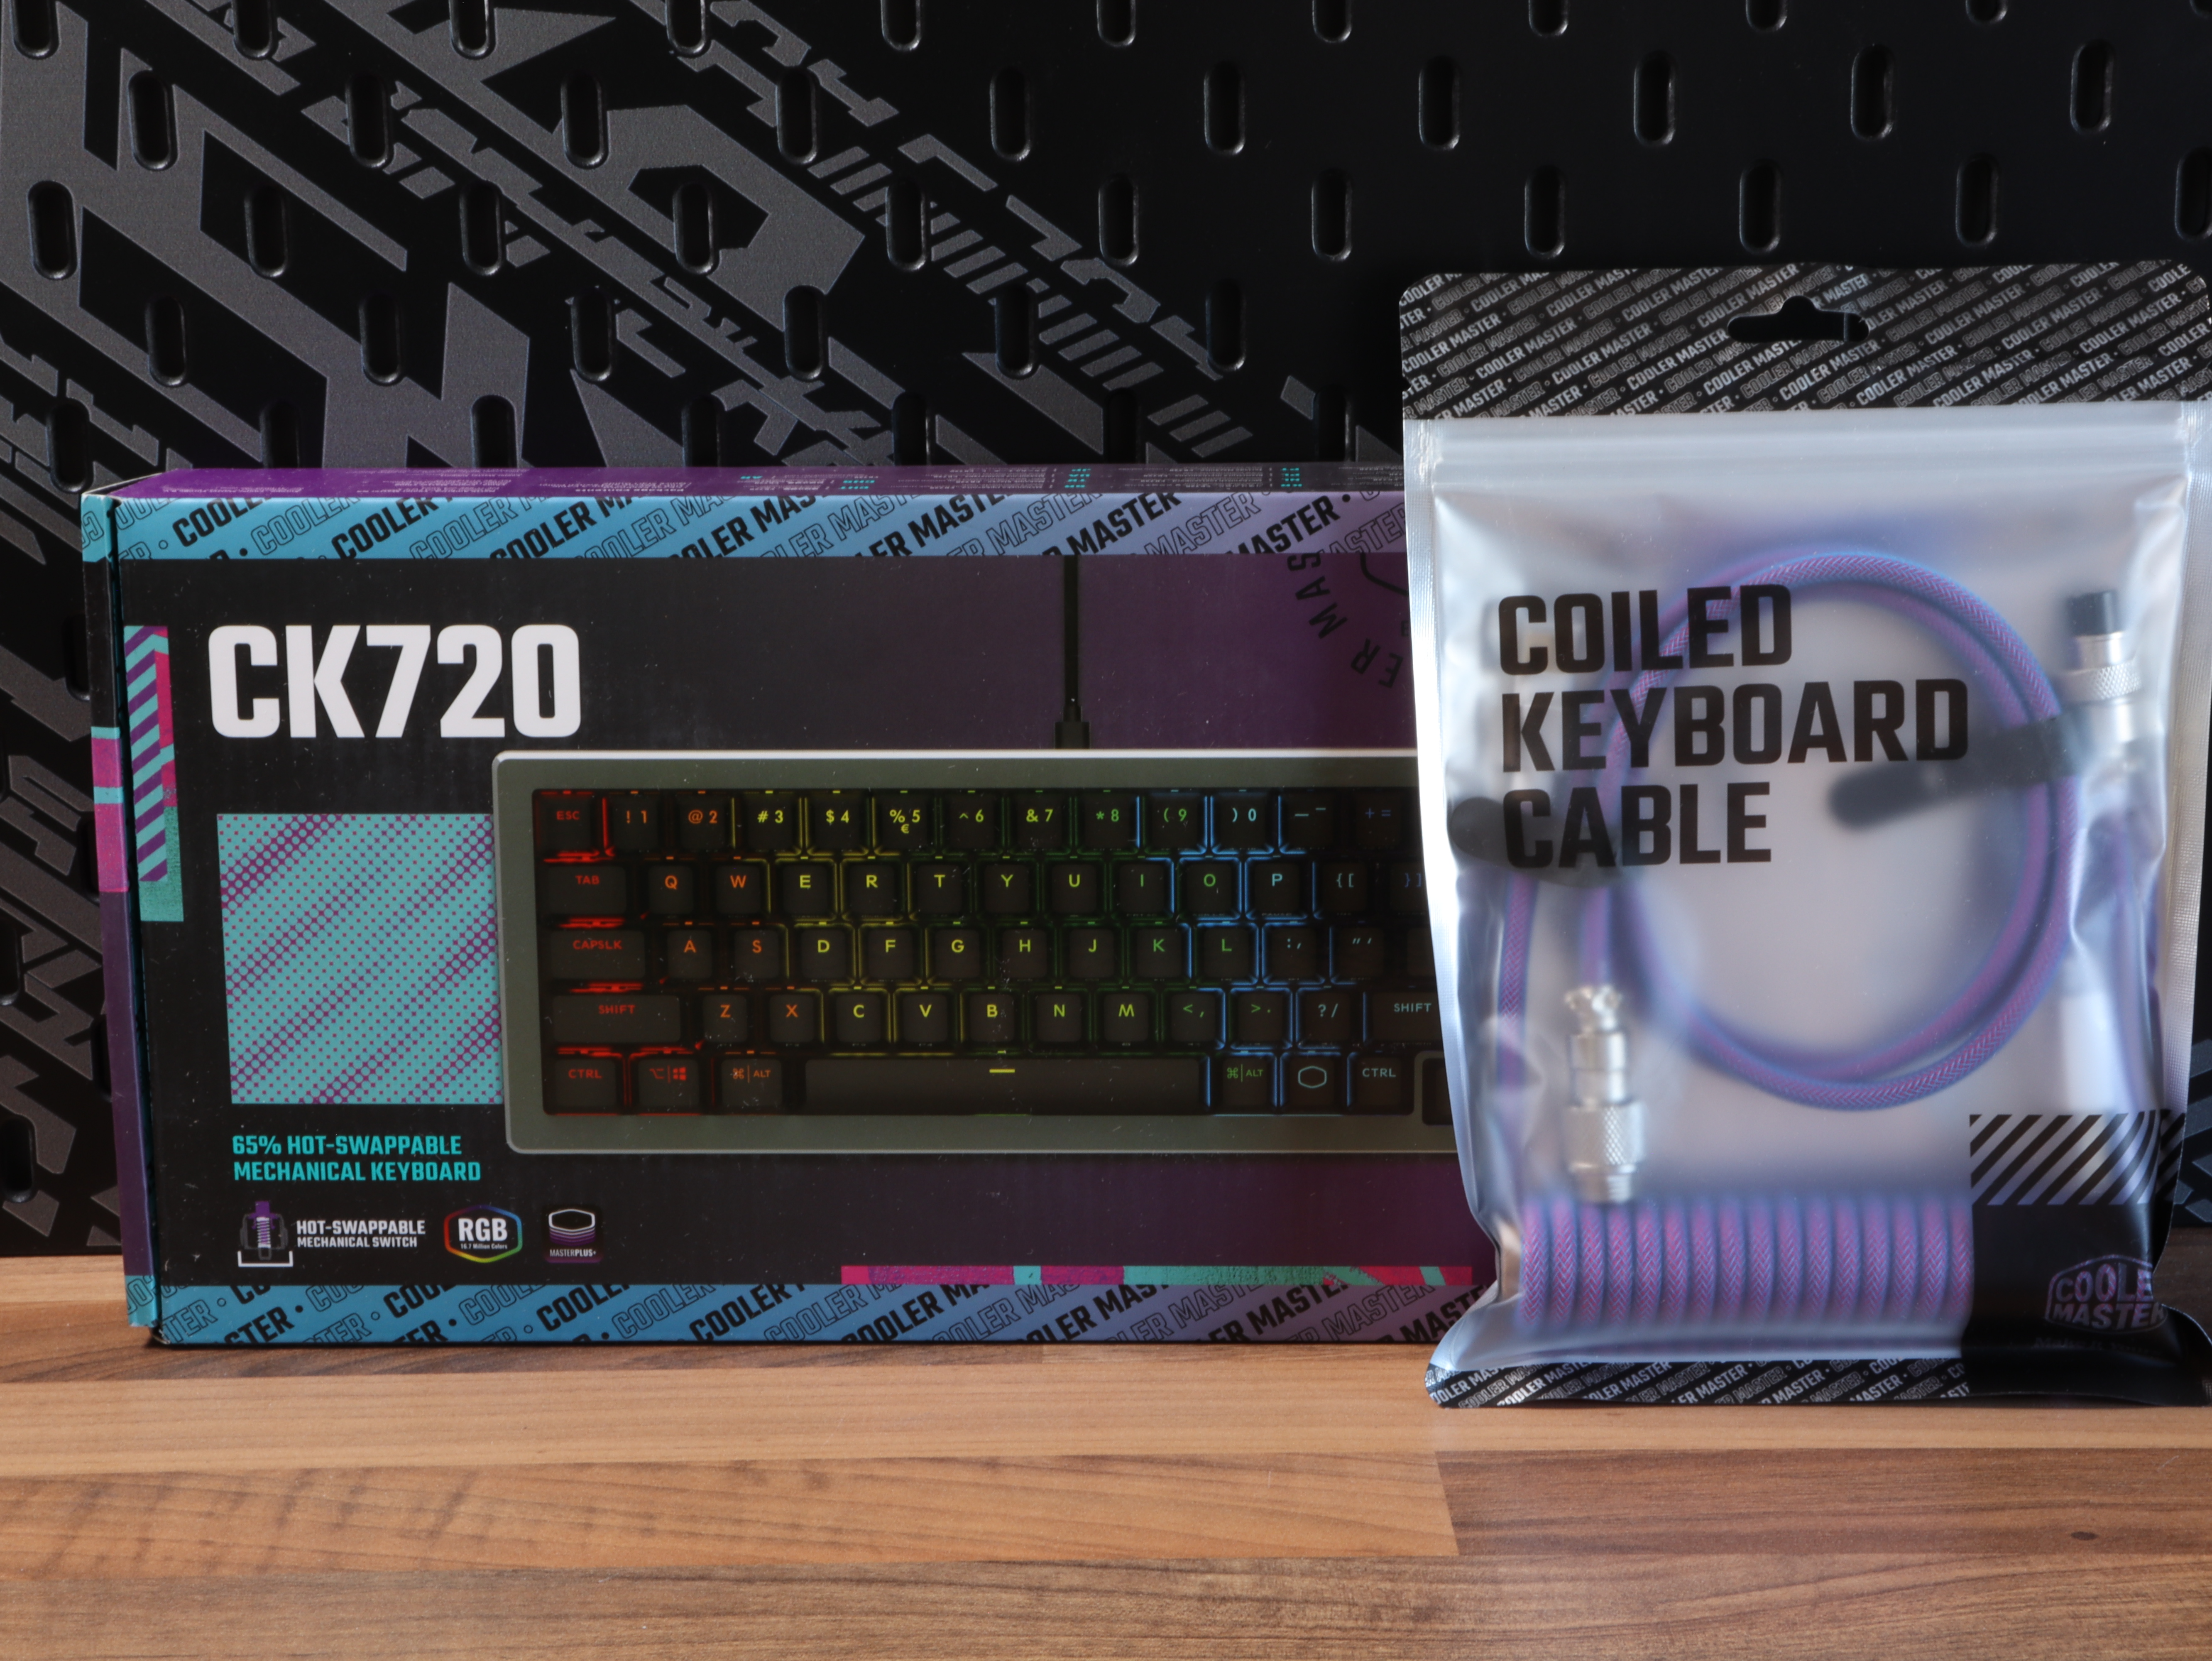 V2 kailh multimedia keyboard gaming Cooler keyboard cable RGB 65% CK720 Master wired TKL.JPG